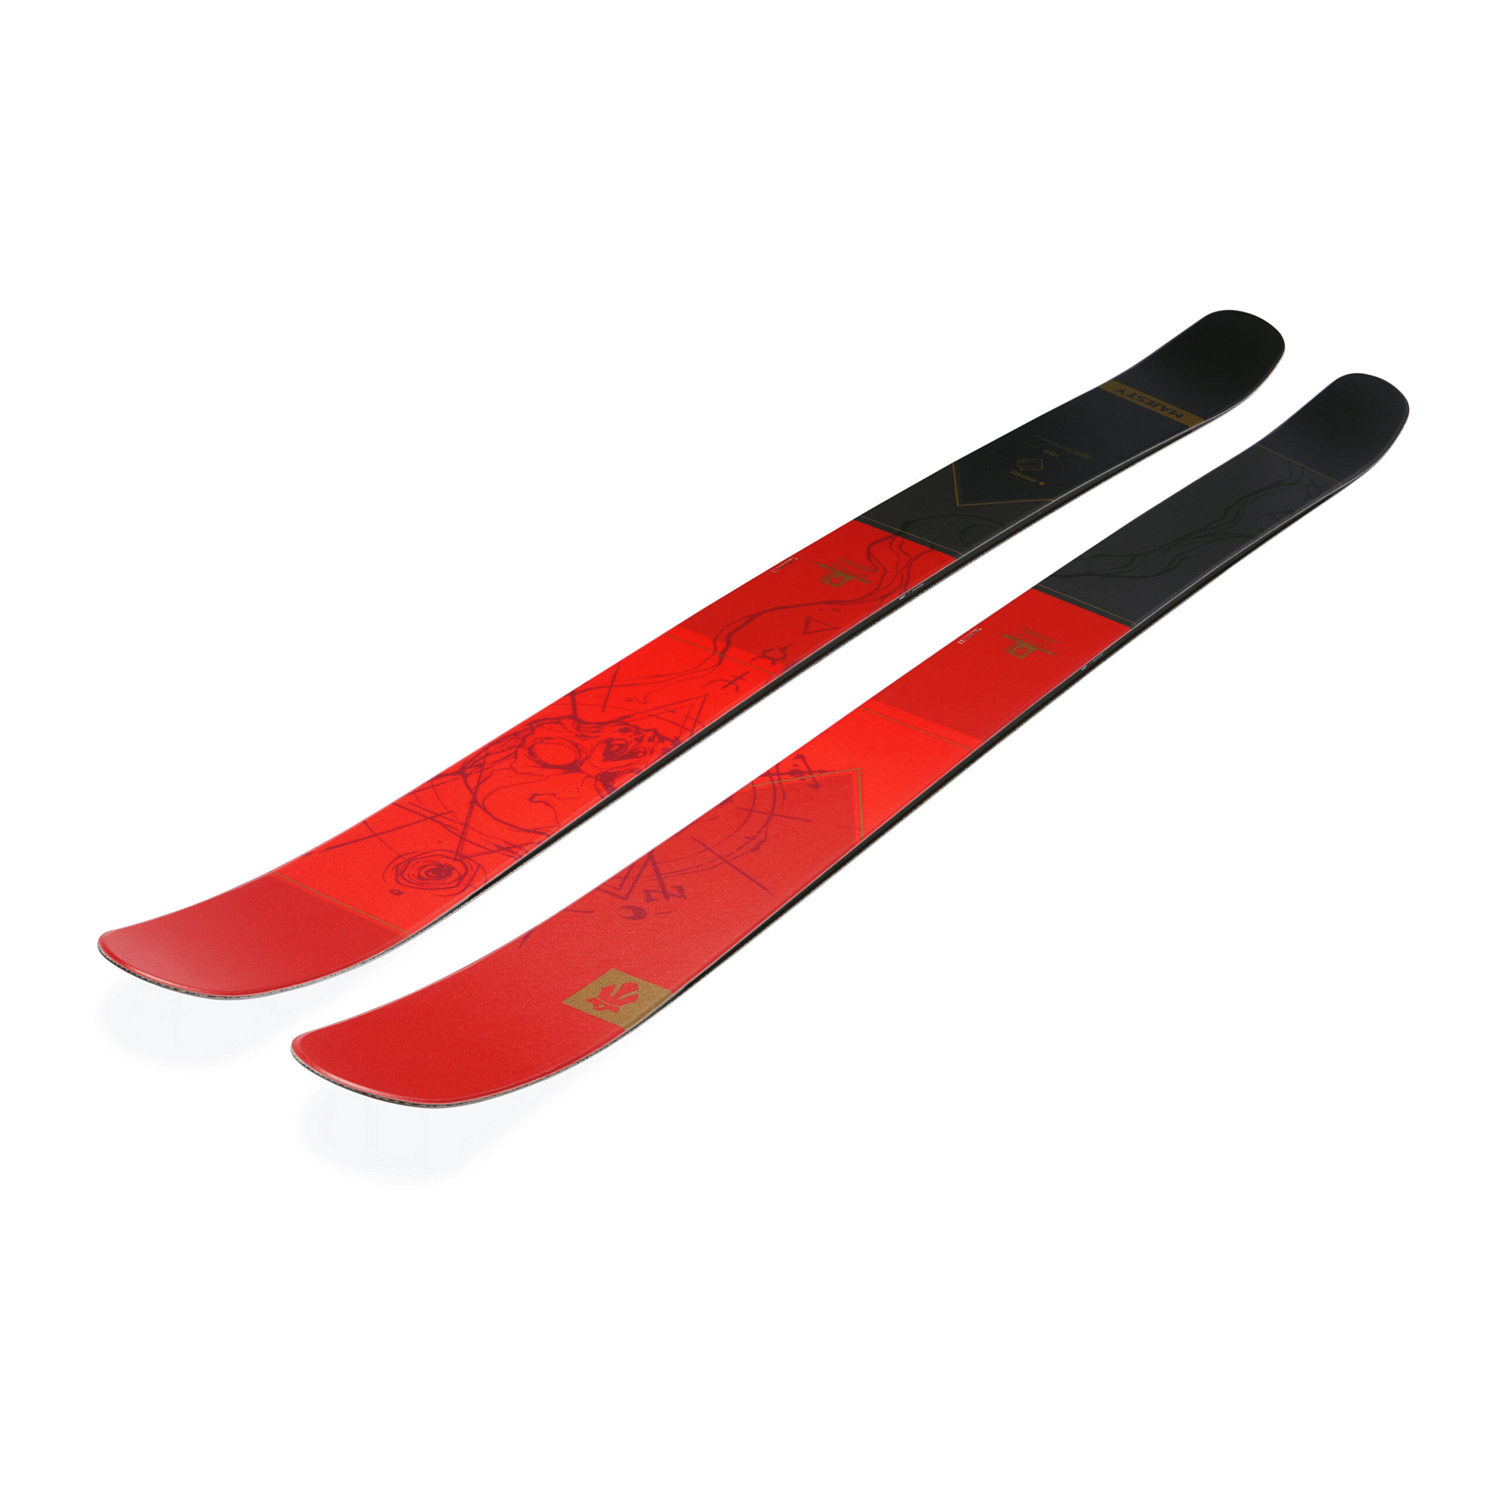 Горные лыжи MAJESTY Vanguard Red/Black